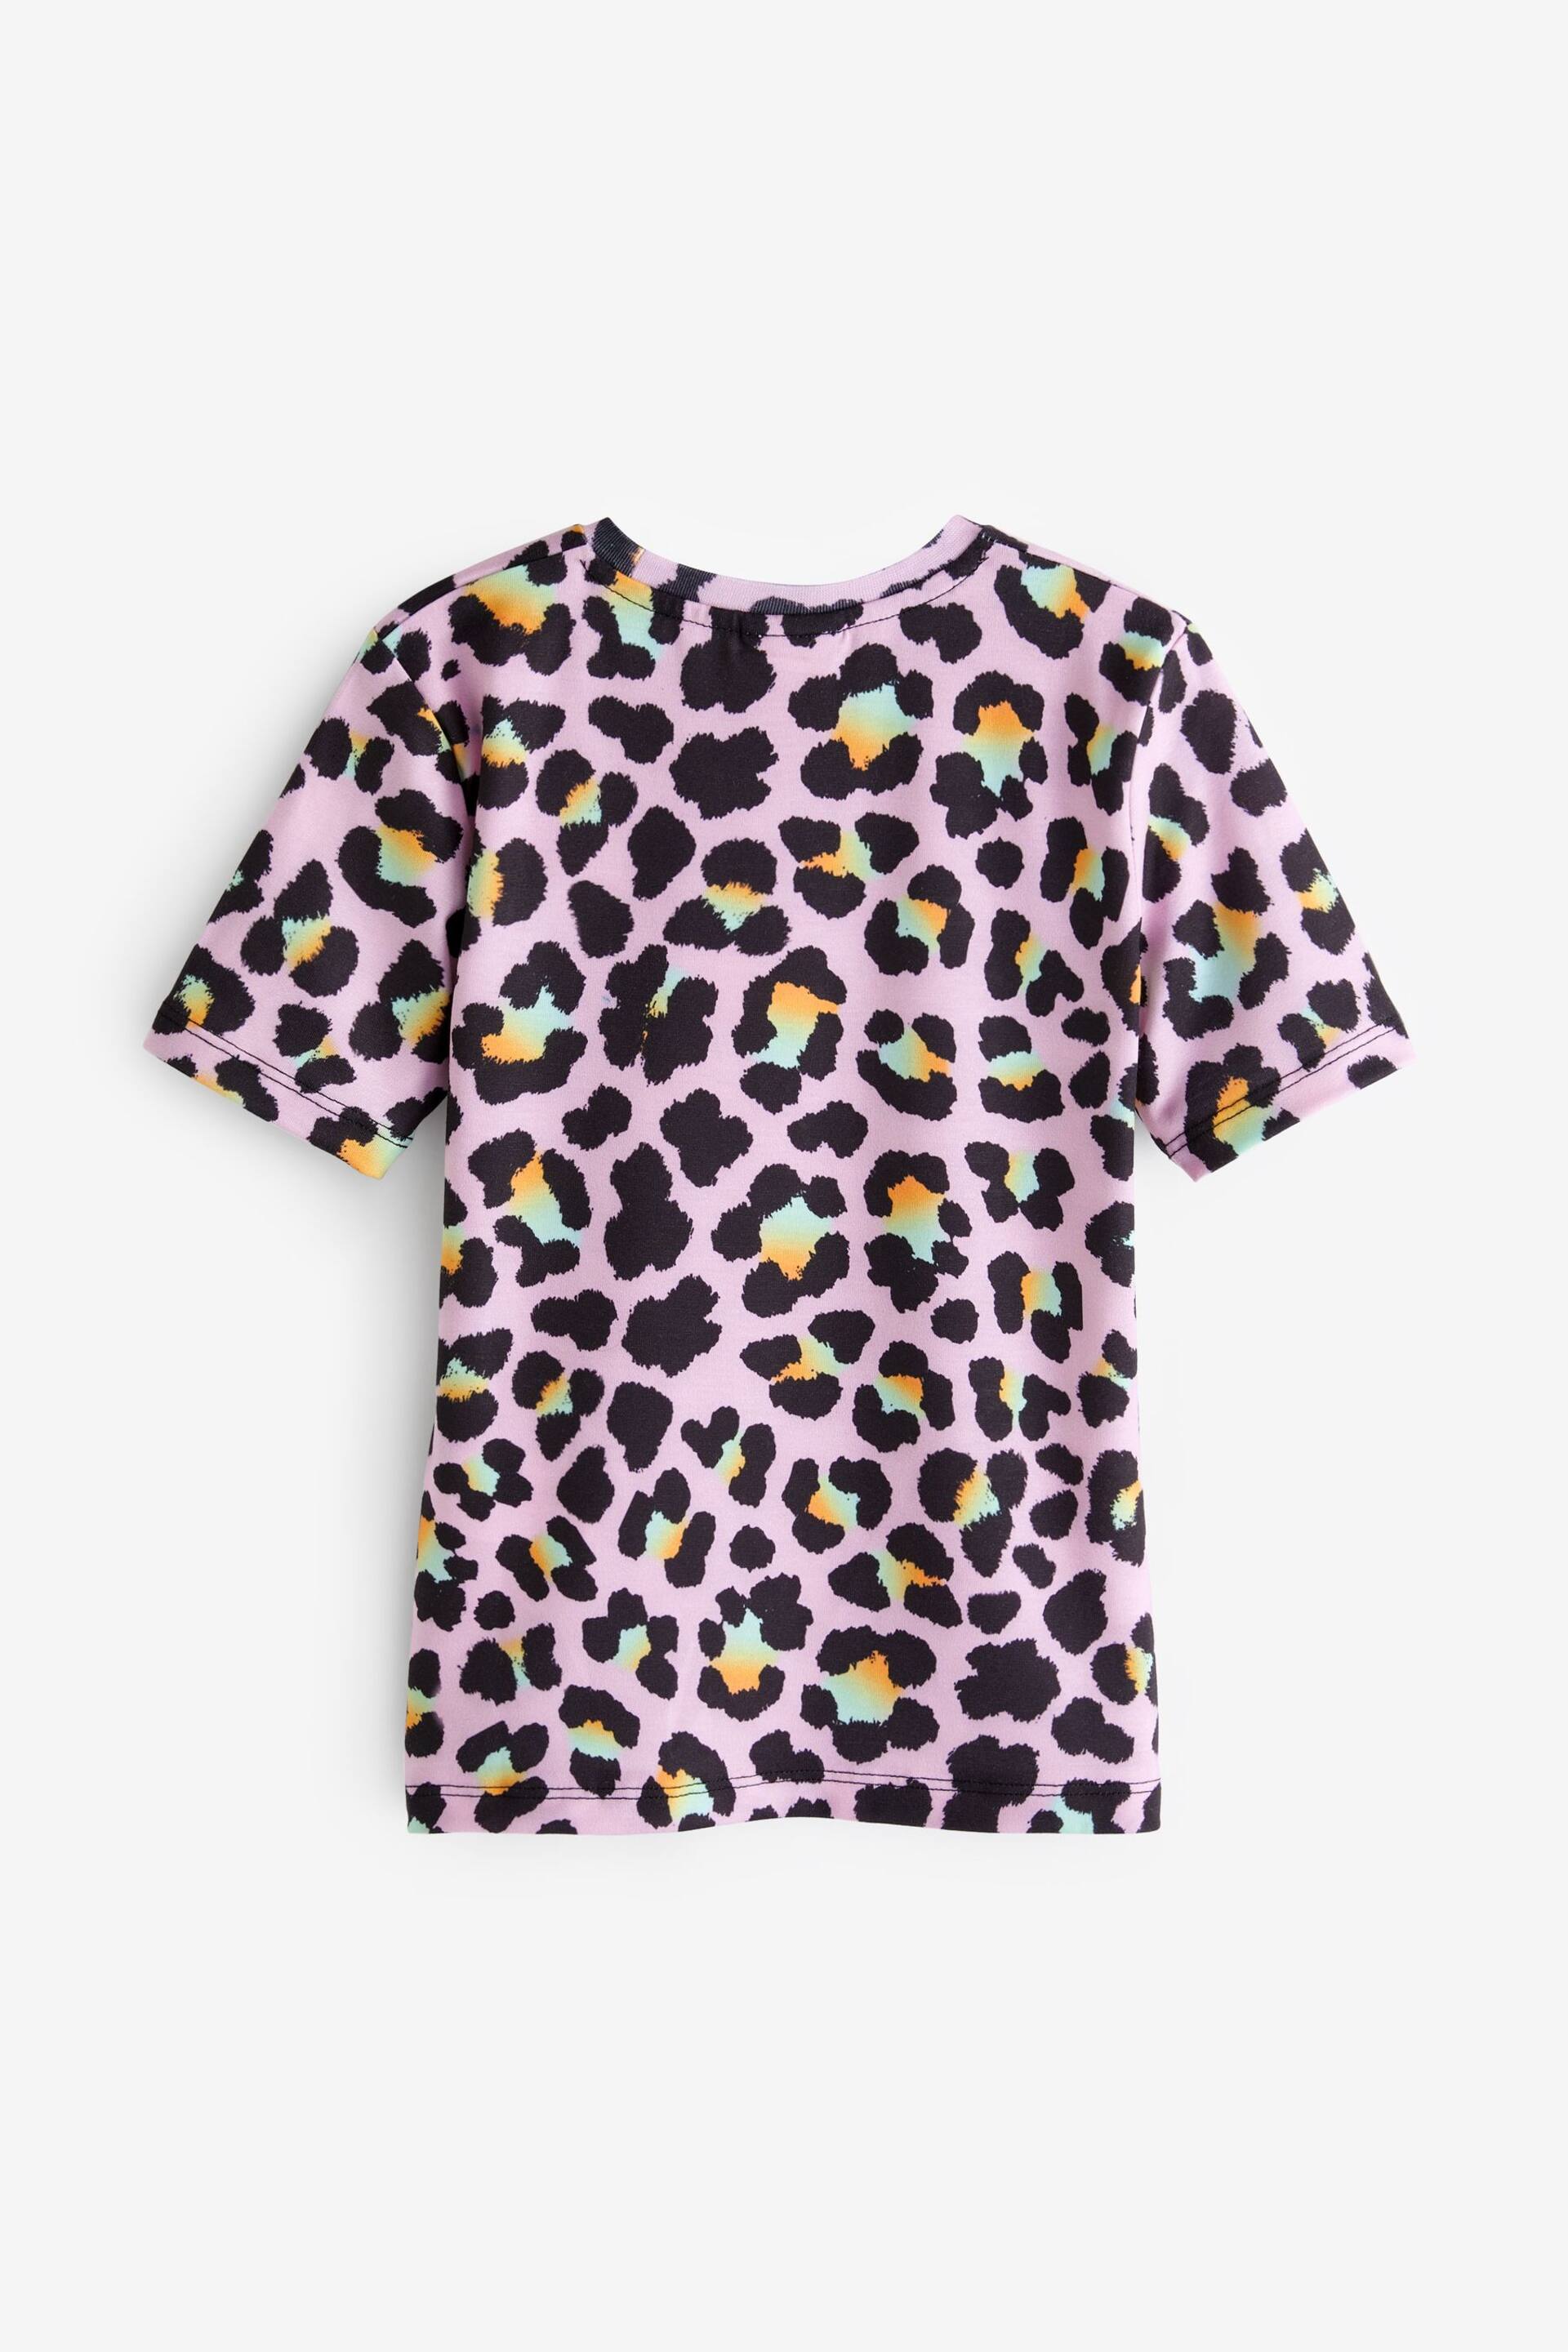 Hype Girls Multi Disco Leopard T-Shirt - Image 2 of 4